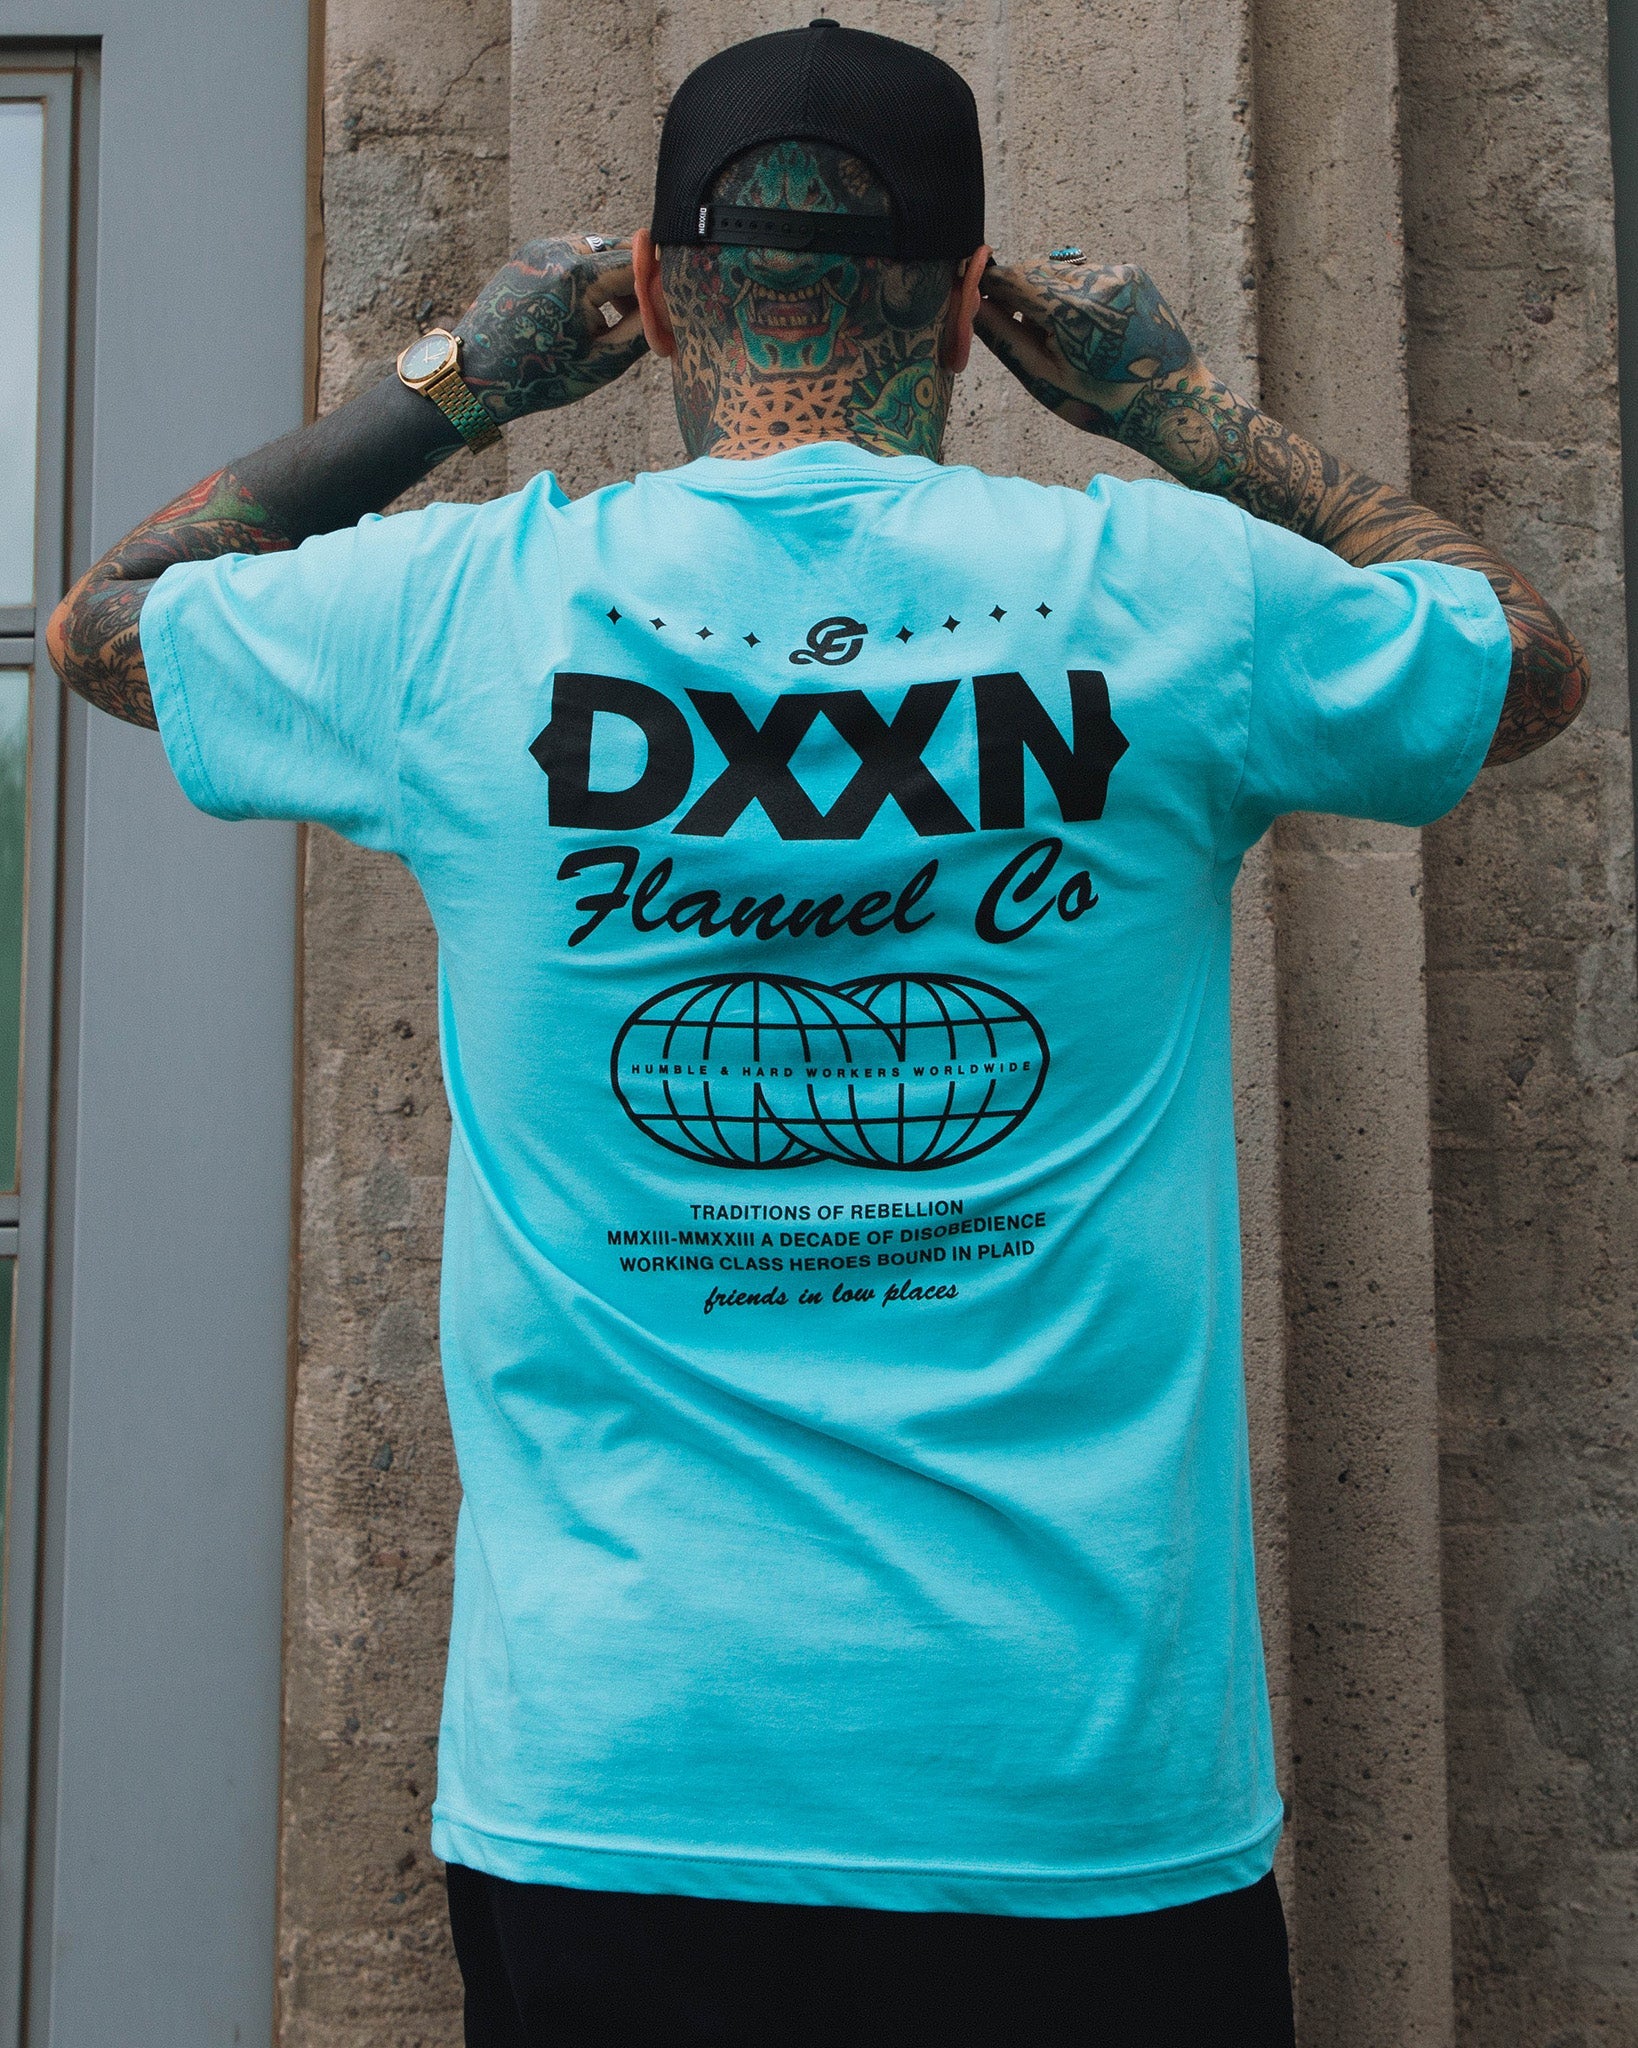 Men's Black Tech T-Shirt - Tiffany | Dixxon Flannel Co.